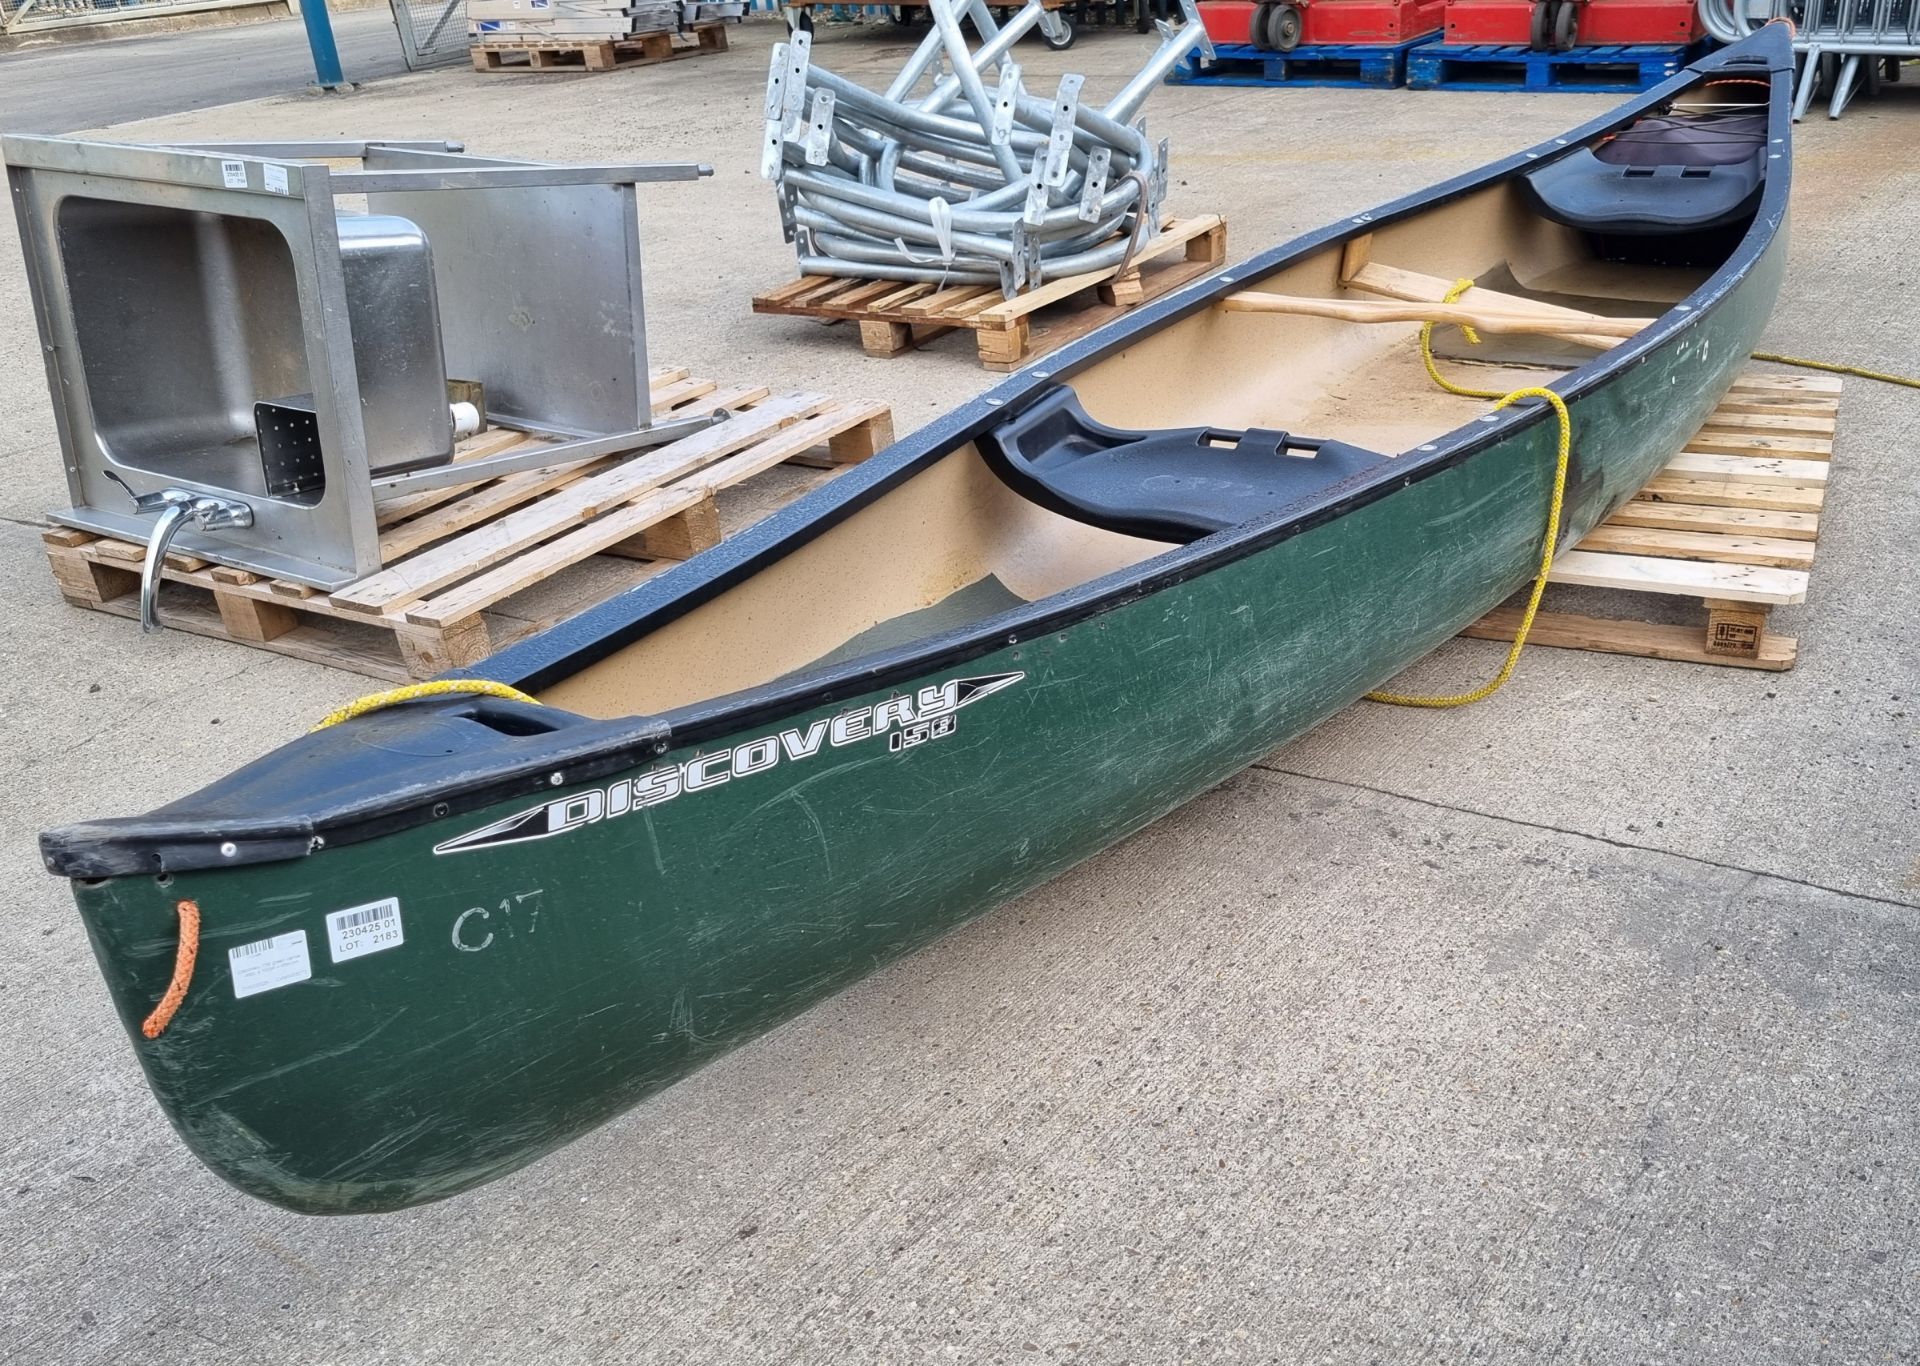 Discovery 158 green canoe - L 490 x W 100 x H 45 cm